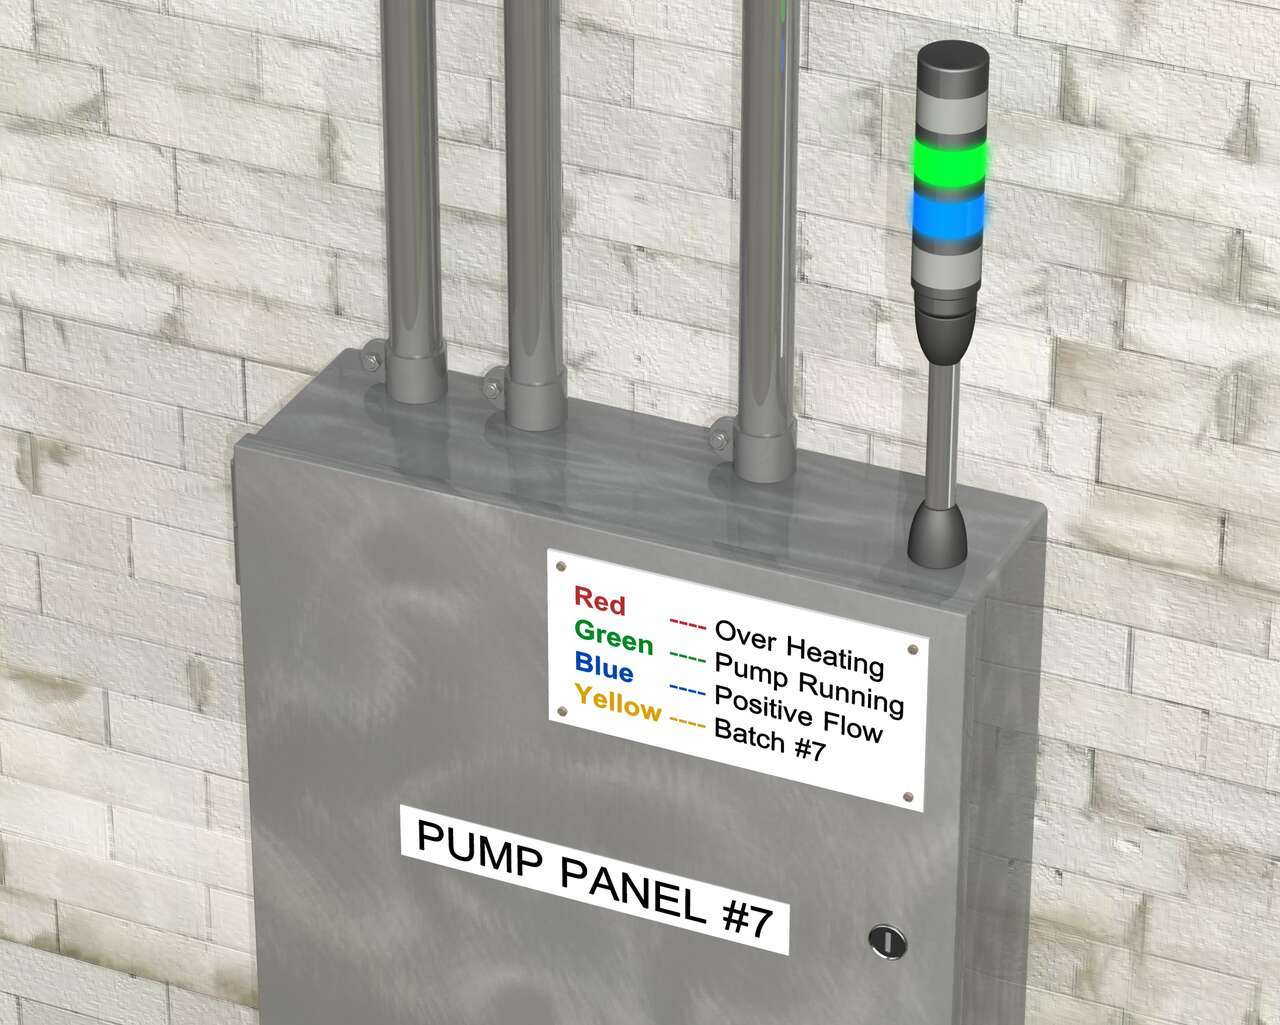 Indicating Pump Panel Status